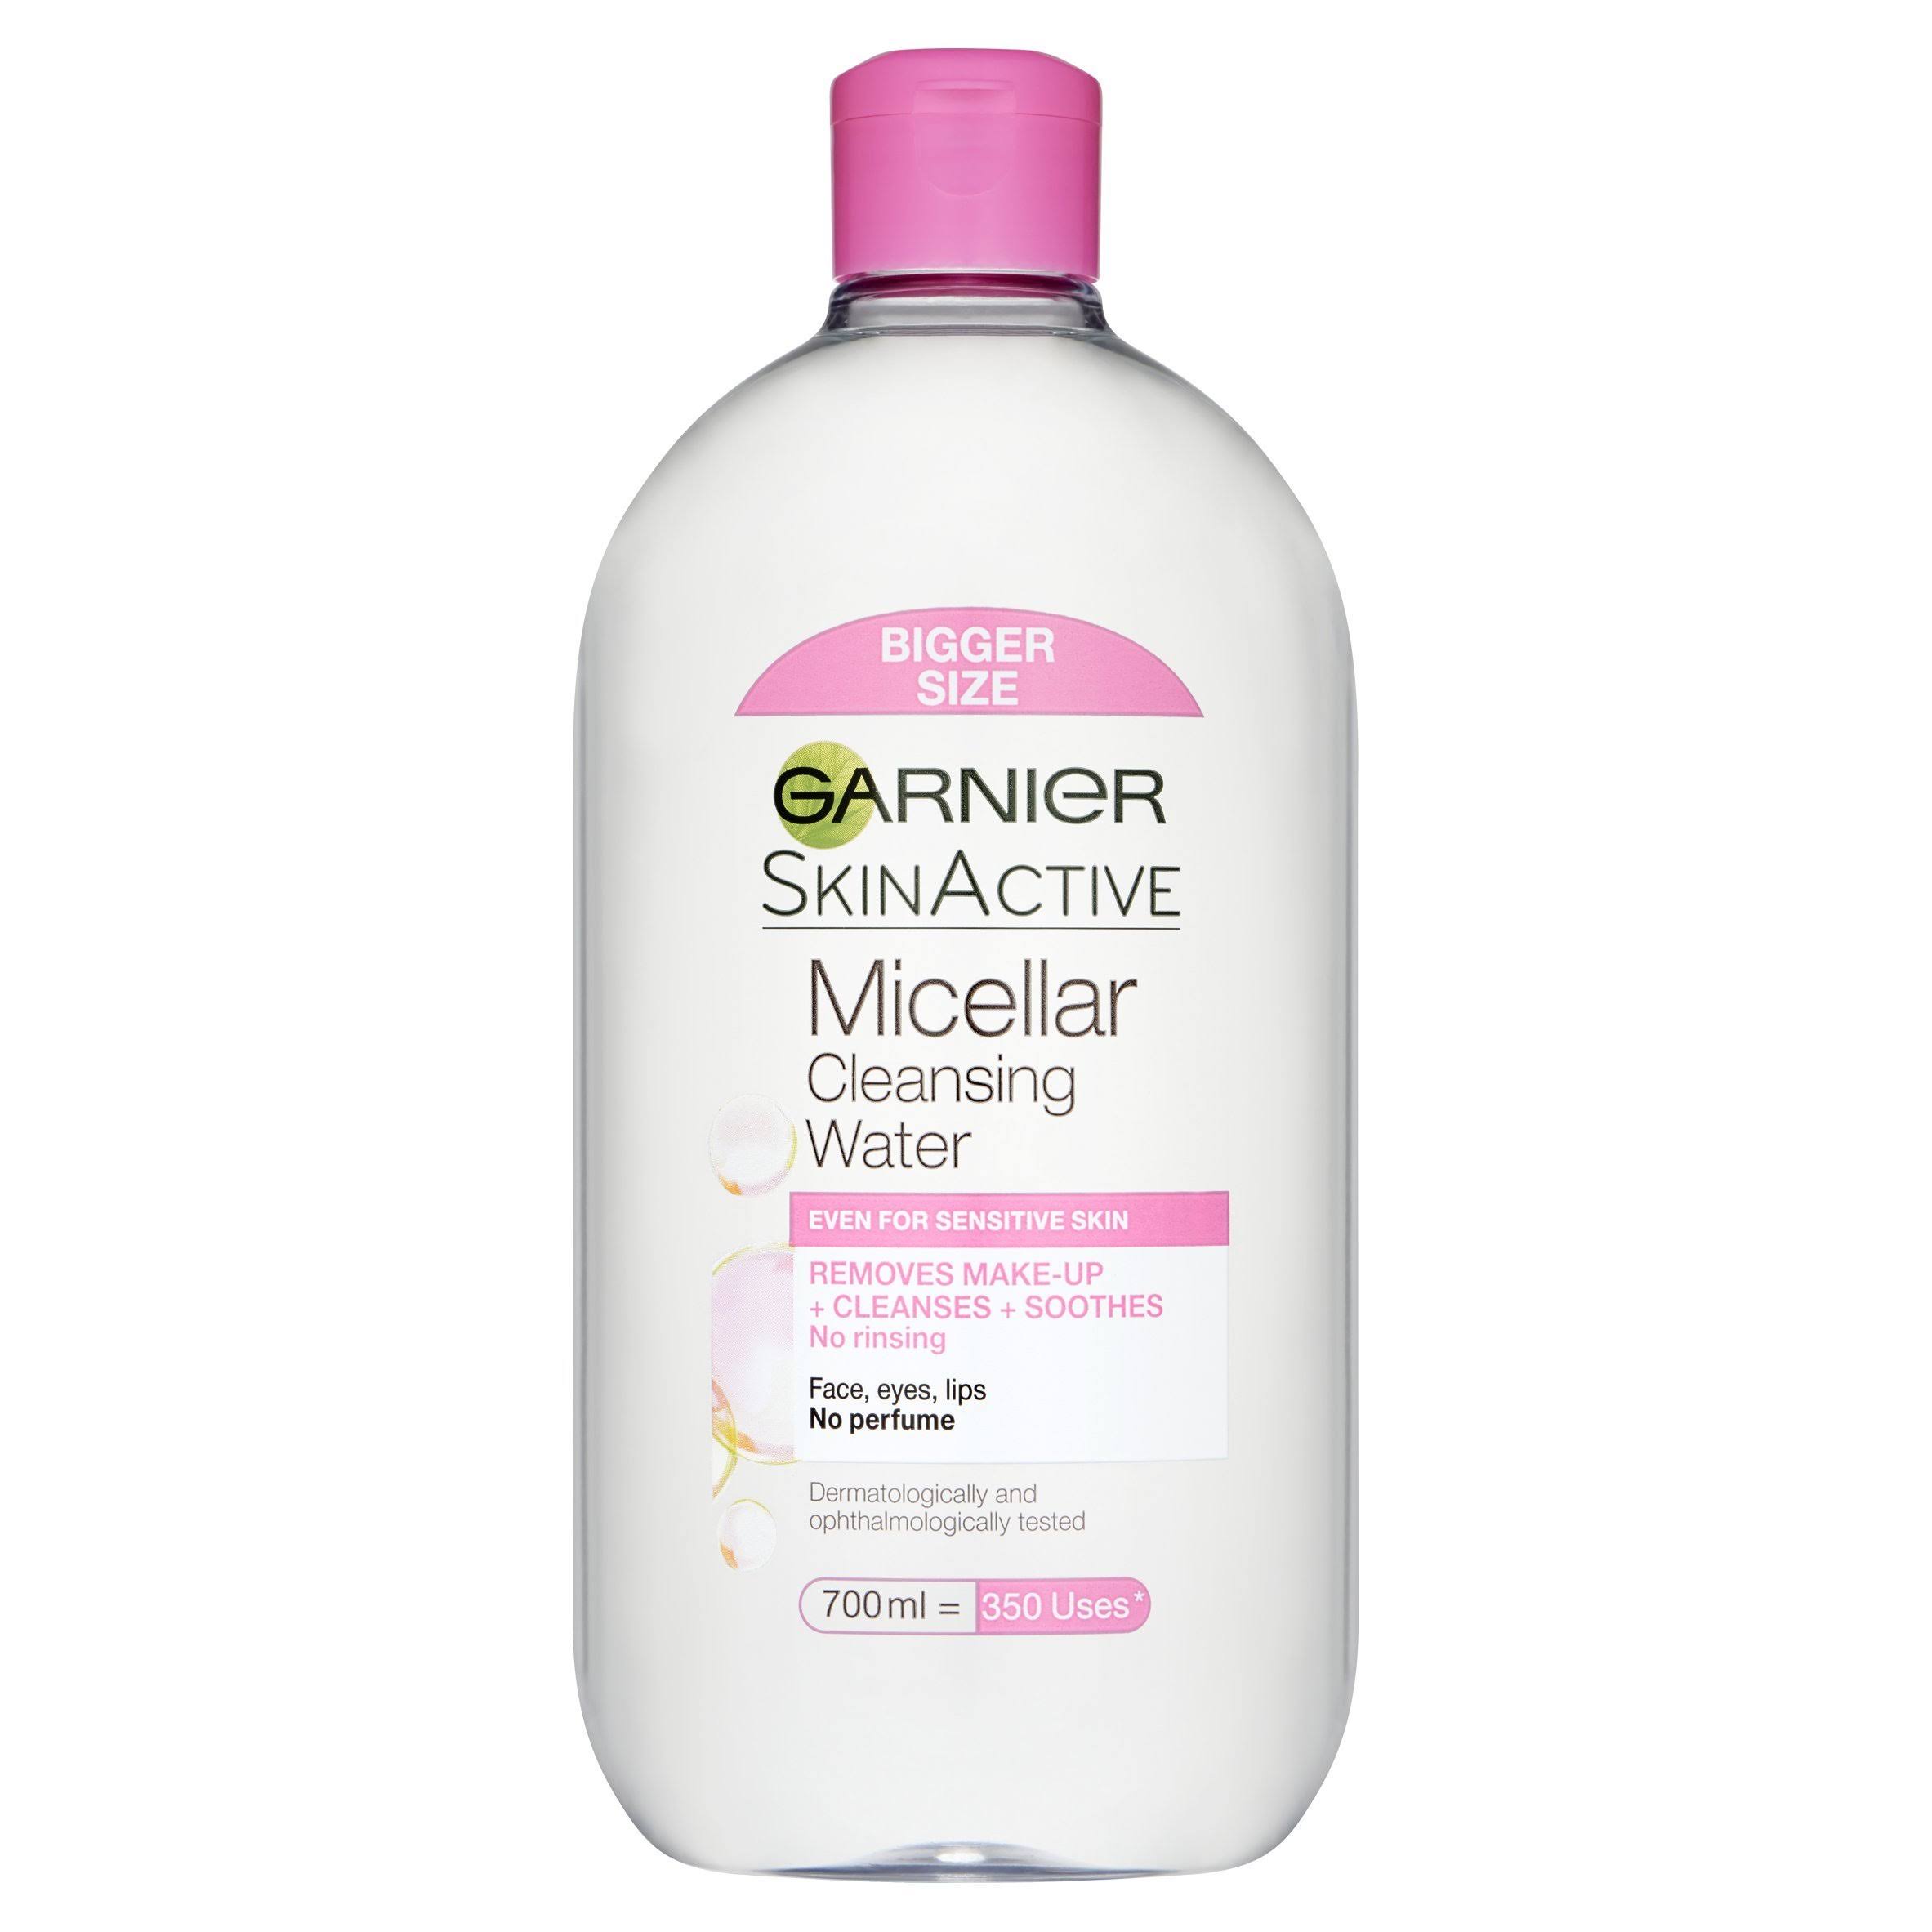 Garnier Micellar Water Facial Cleanser - Sensitive Skin, 700ml